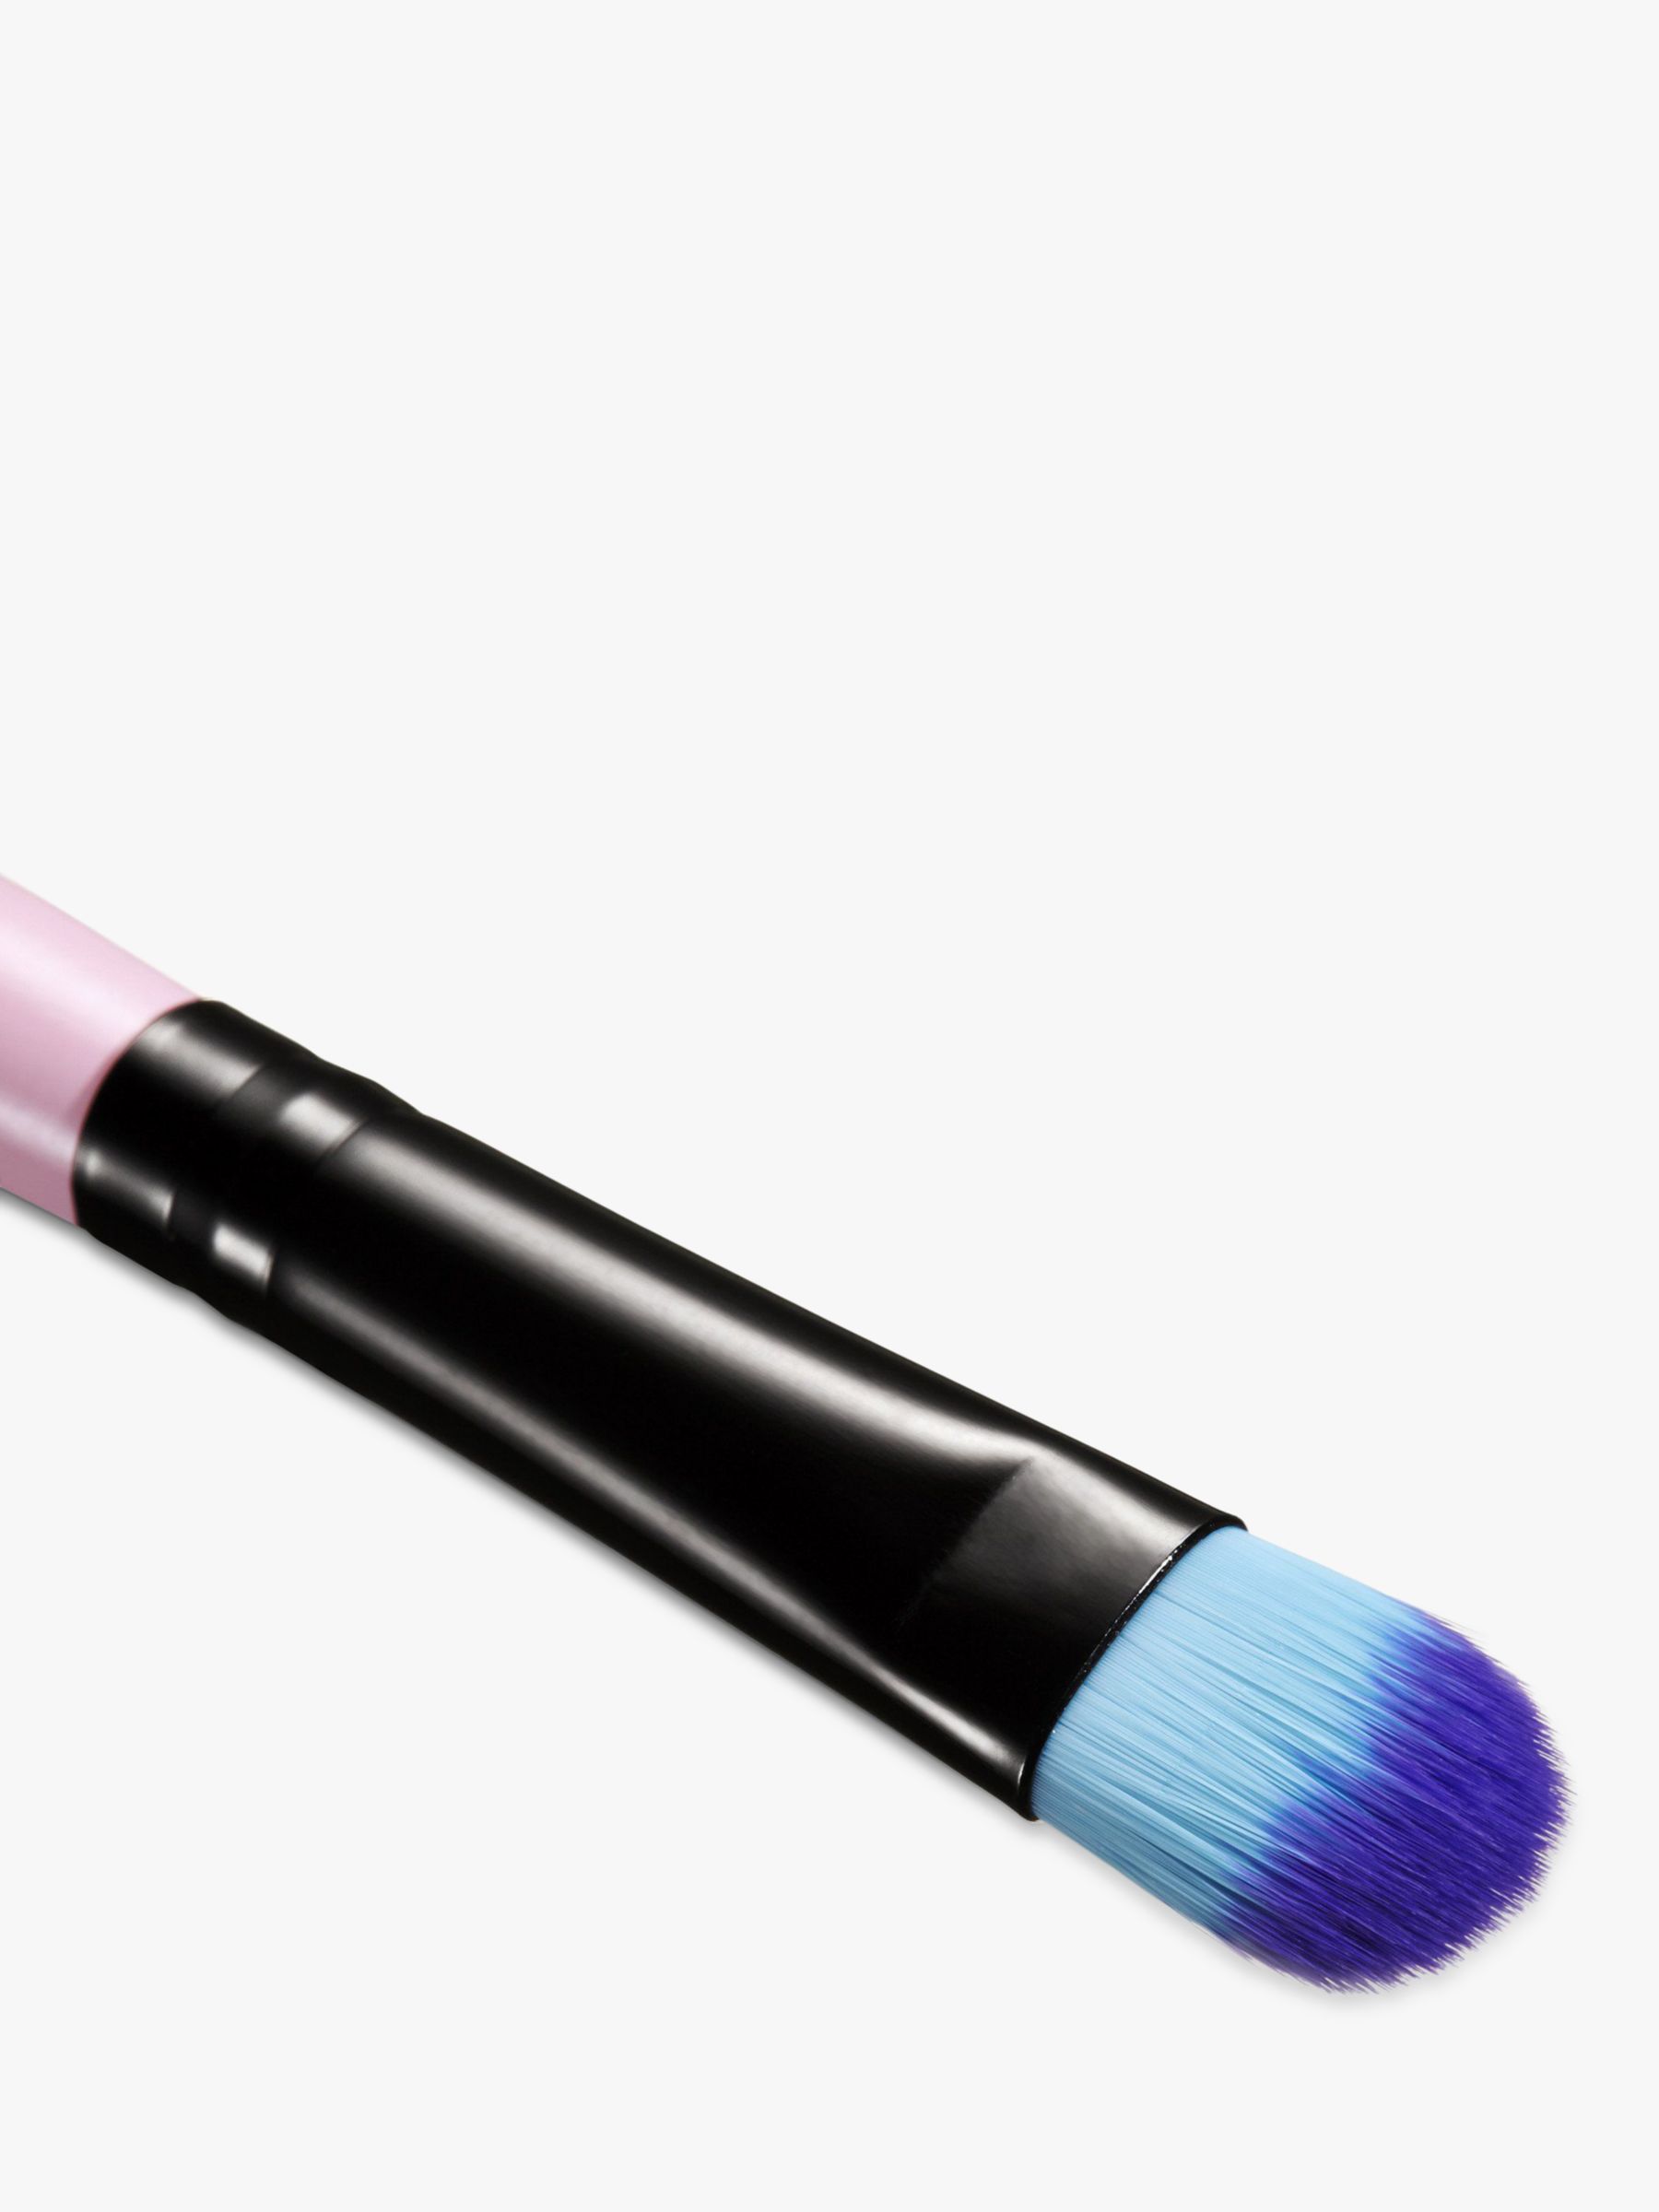 Spectrum Oval Concealer Makeup Brush 3